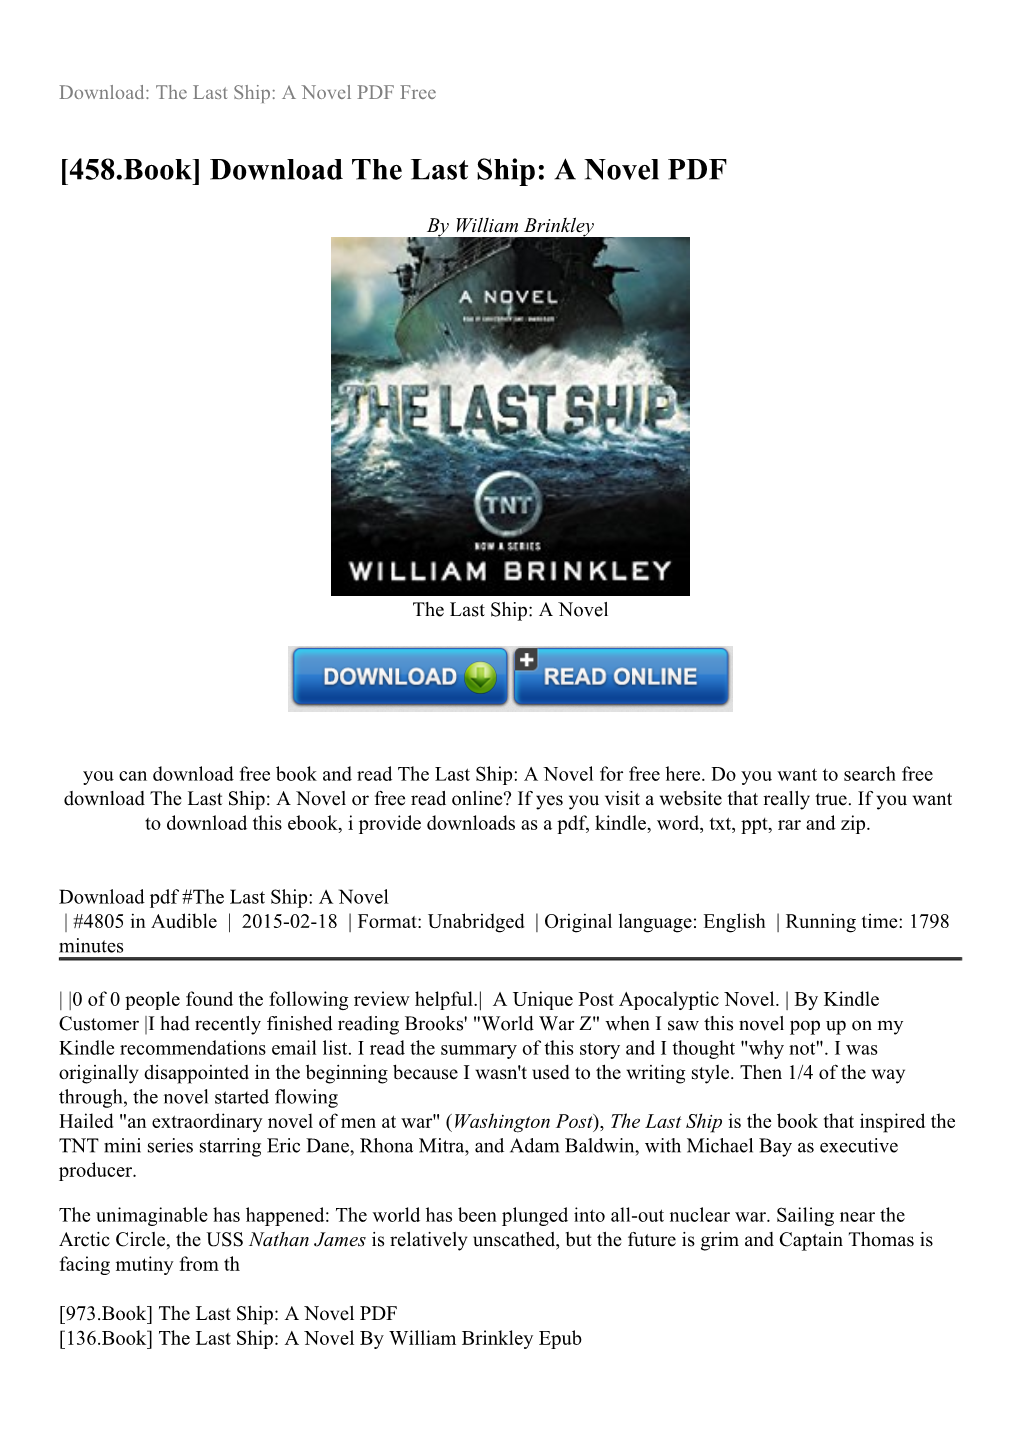 [458.Book] Download the Last Ship: a Novel PDF